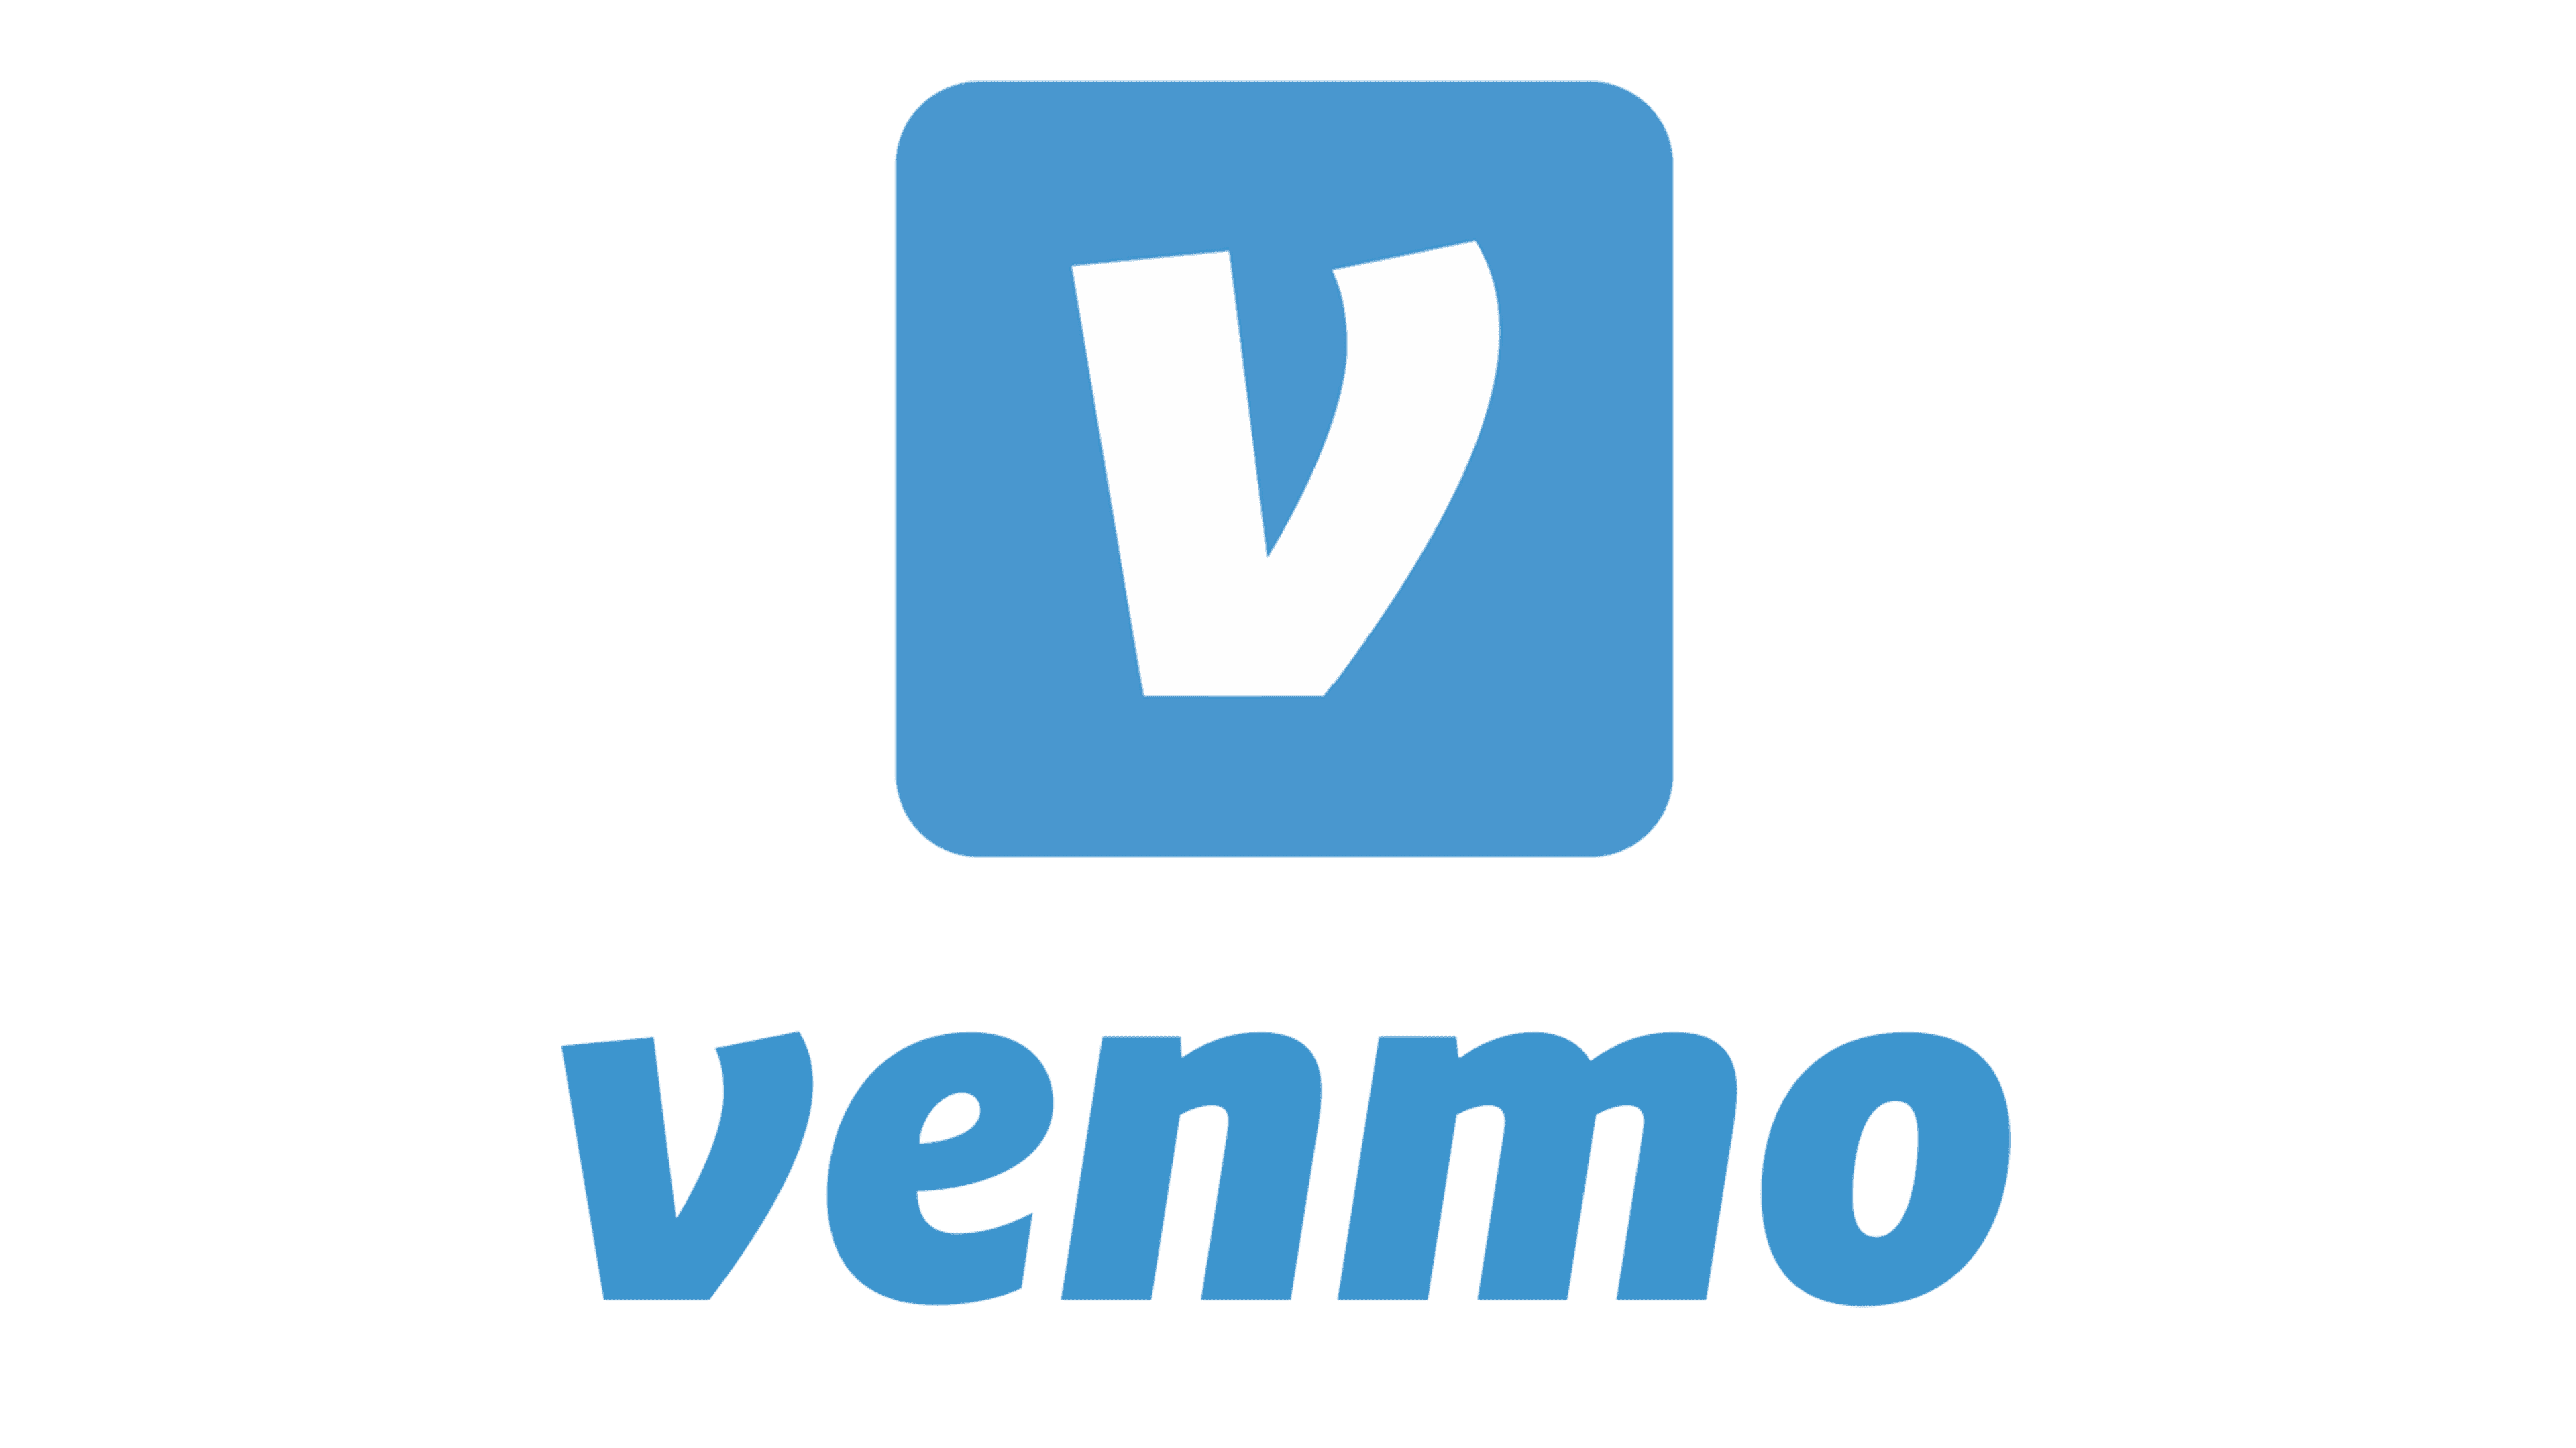 A blue and white logo for venmo.